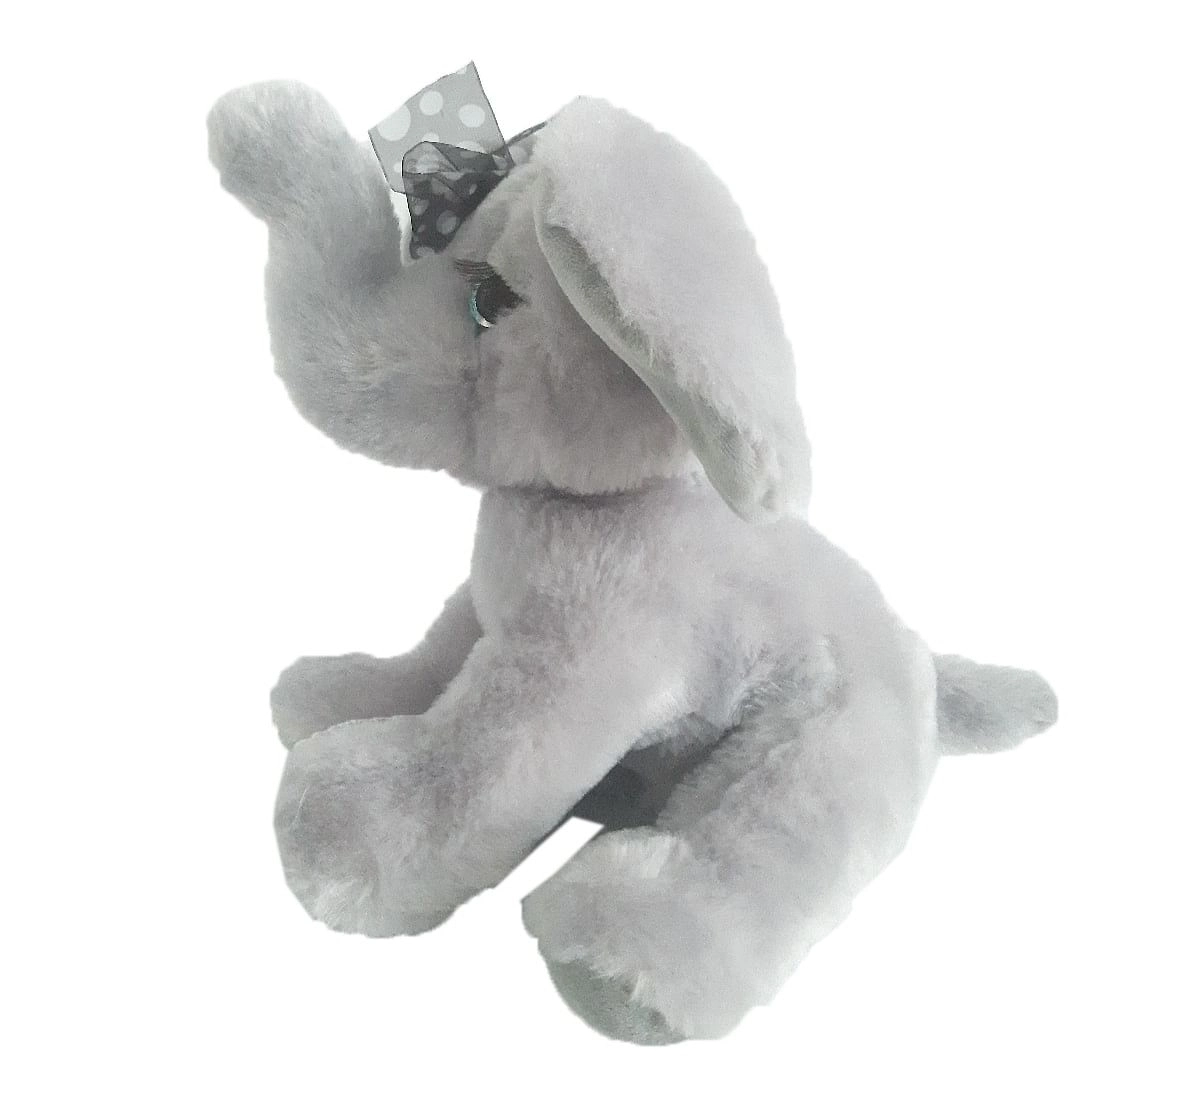 Lash Z Elephant Soft Toy 12" 26 Cm